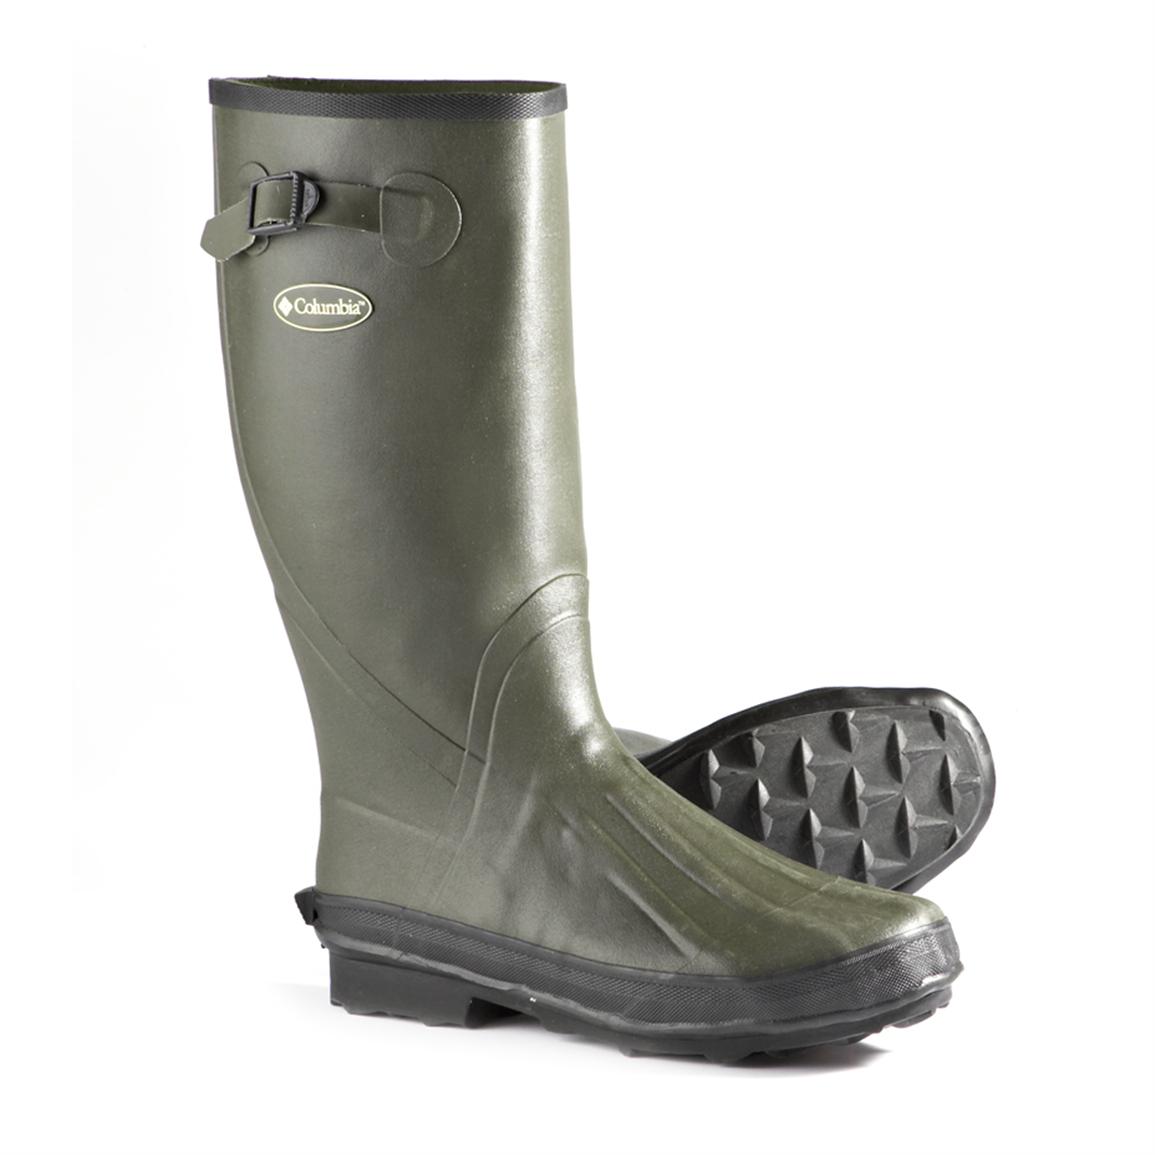 Willamette Rubber Boots, Green 